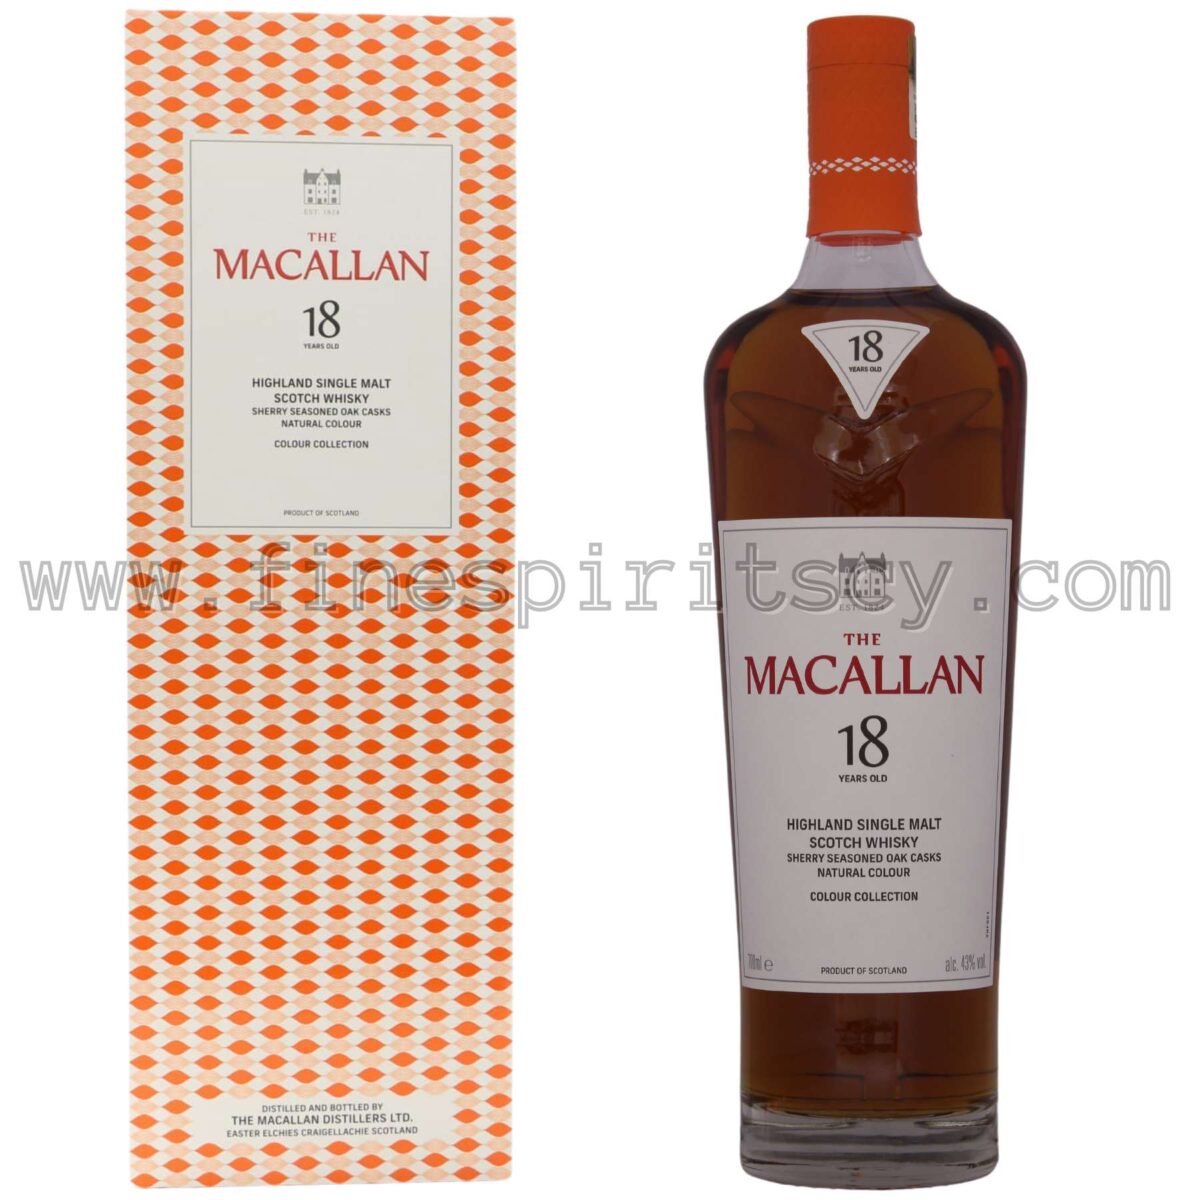 Macallan 18 YO Price Colour Collection Front Box Bottle Cyprus 40 ABV